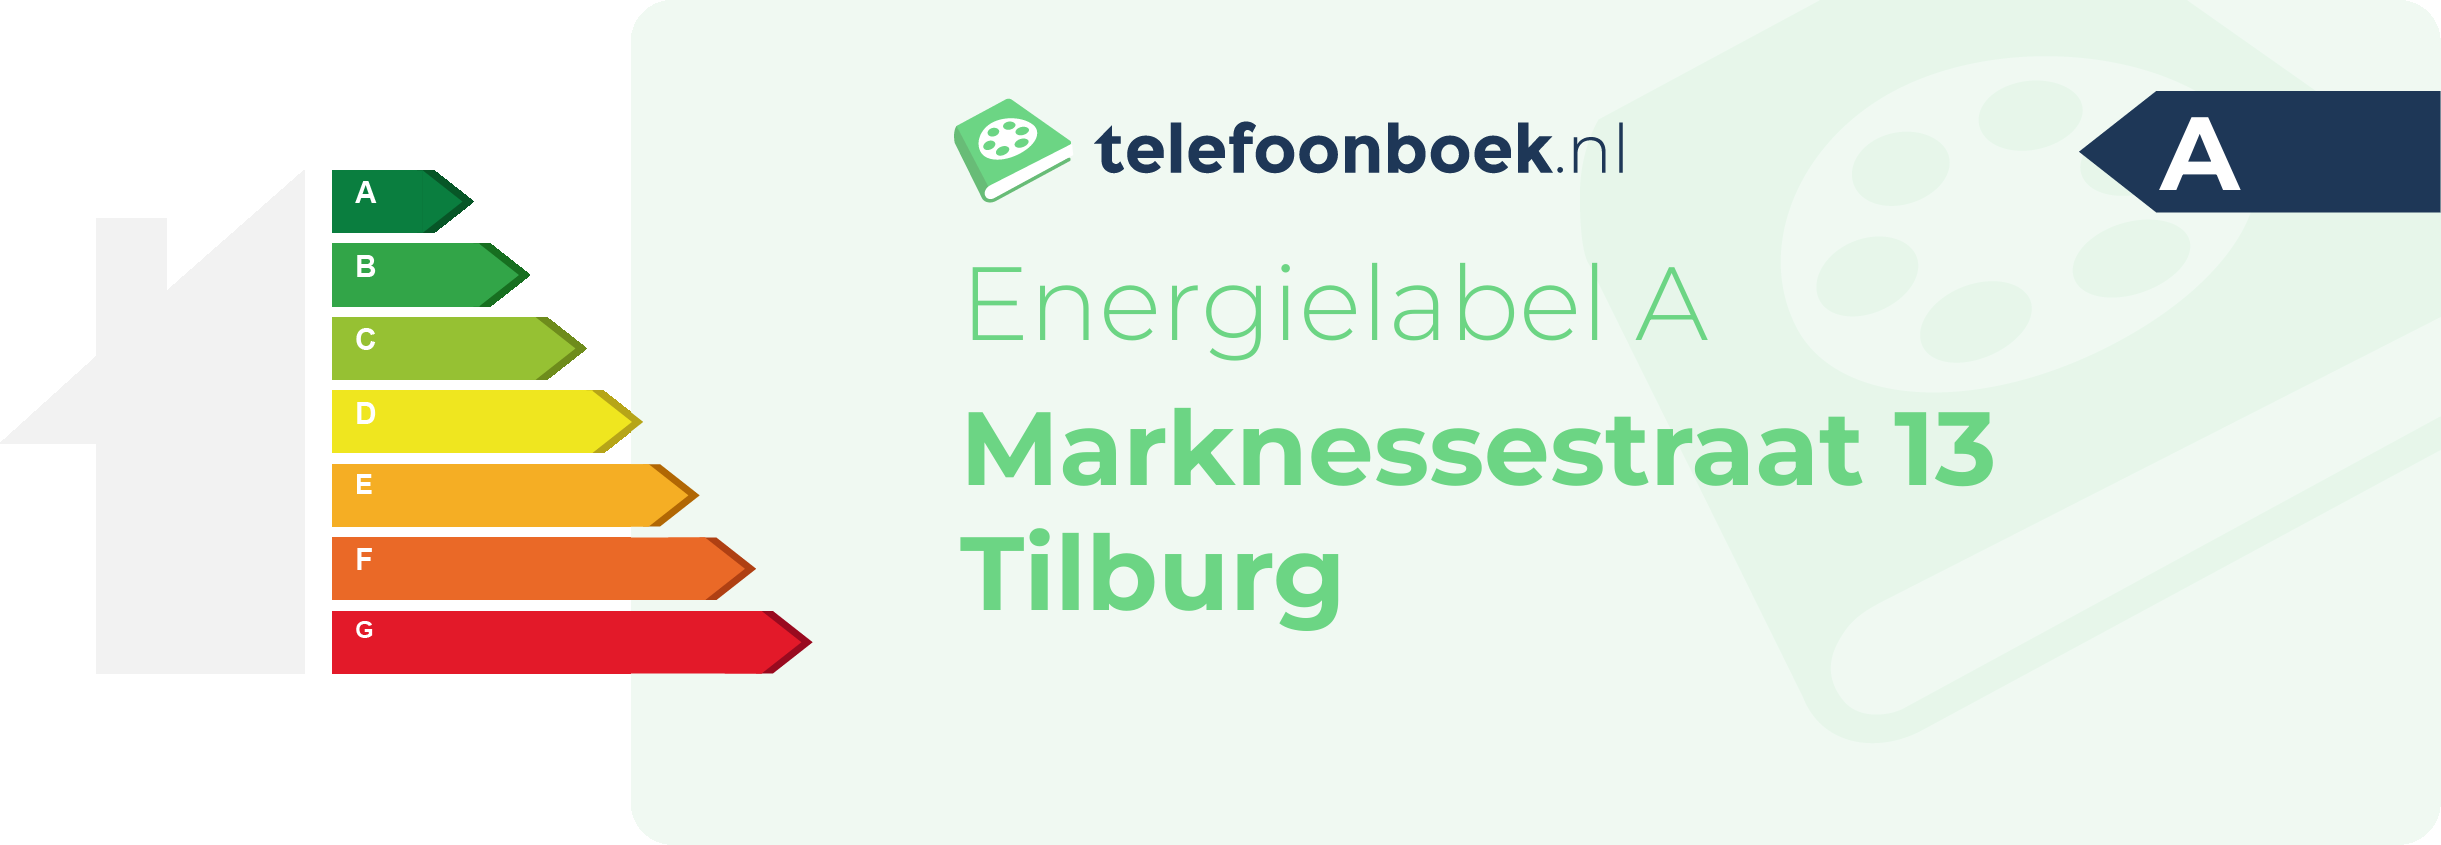 Energielabel Marknessestraat 13 Tilburg